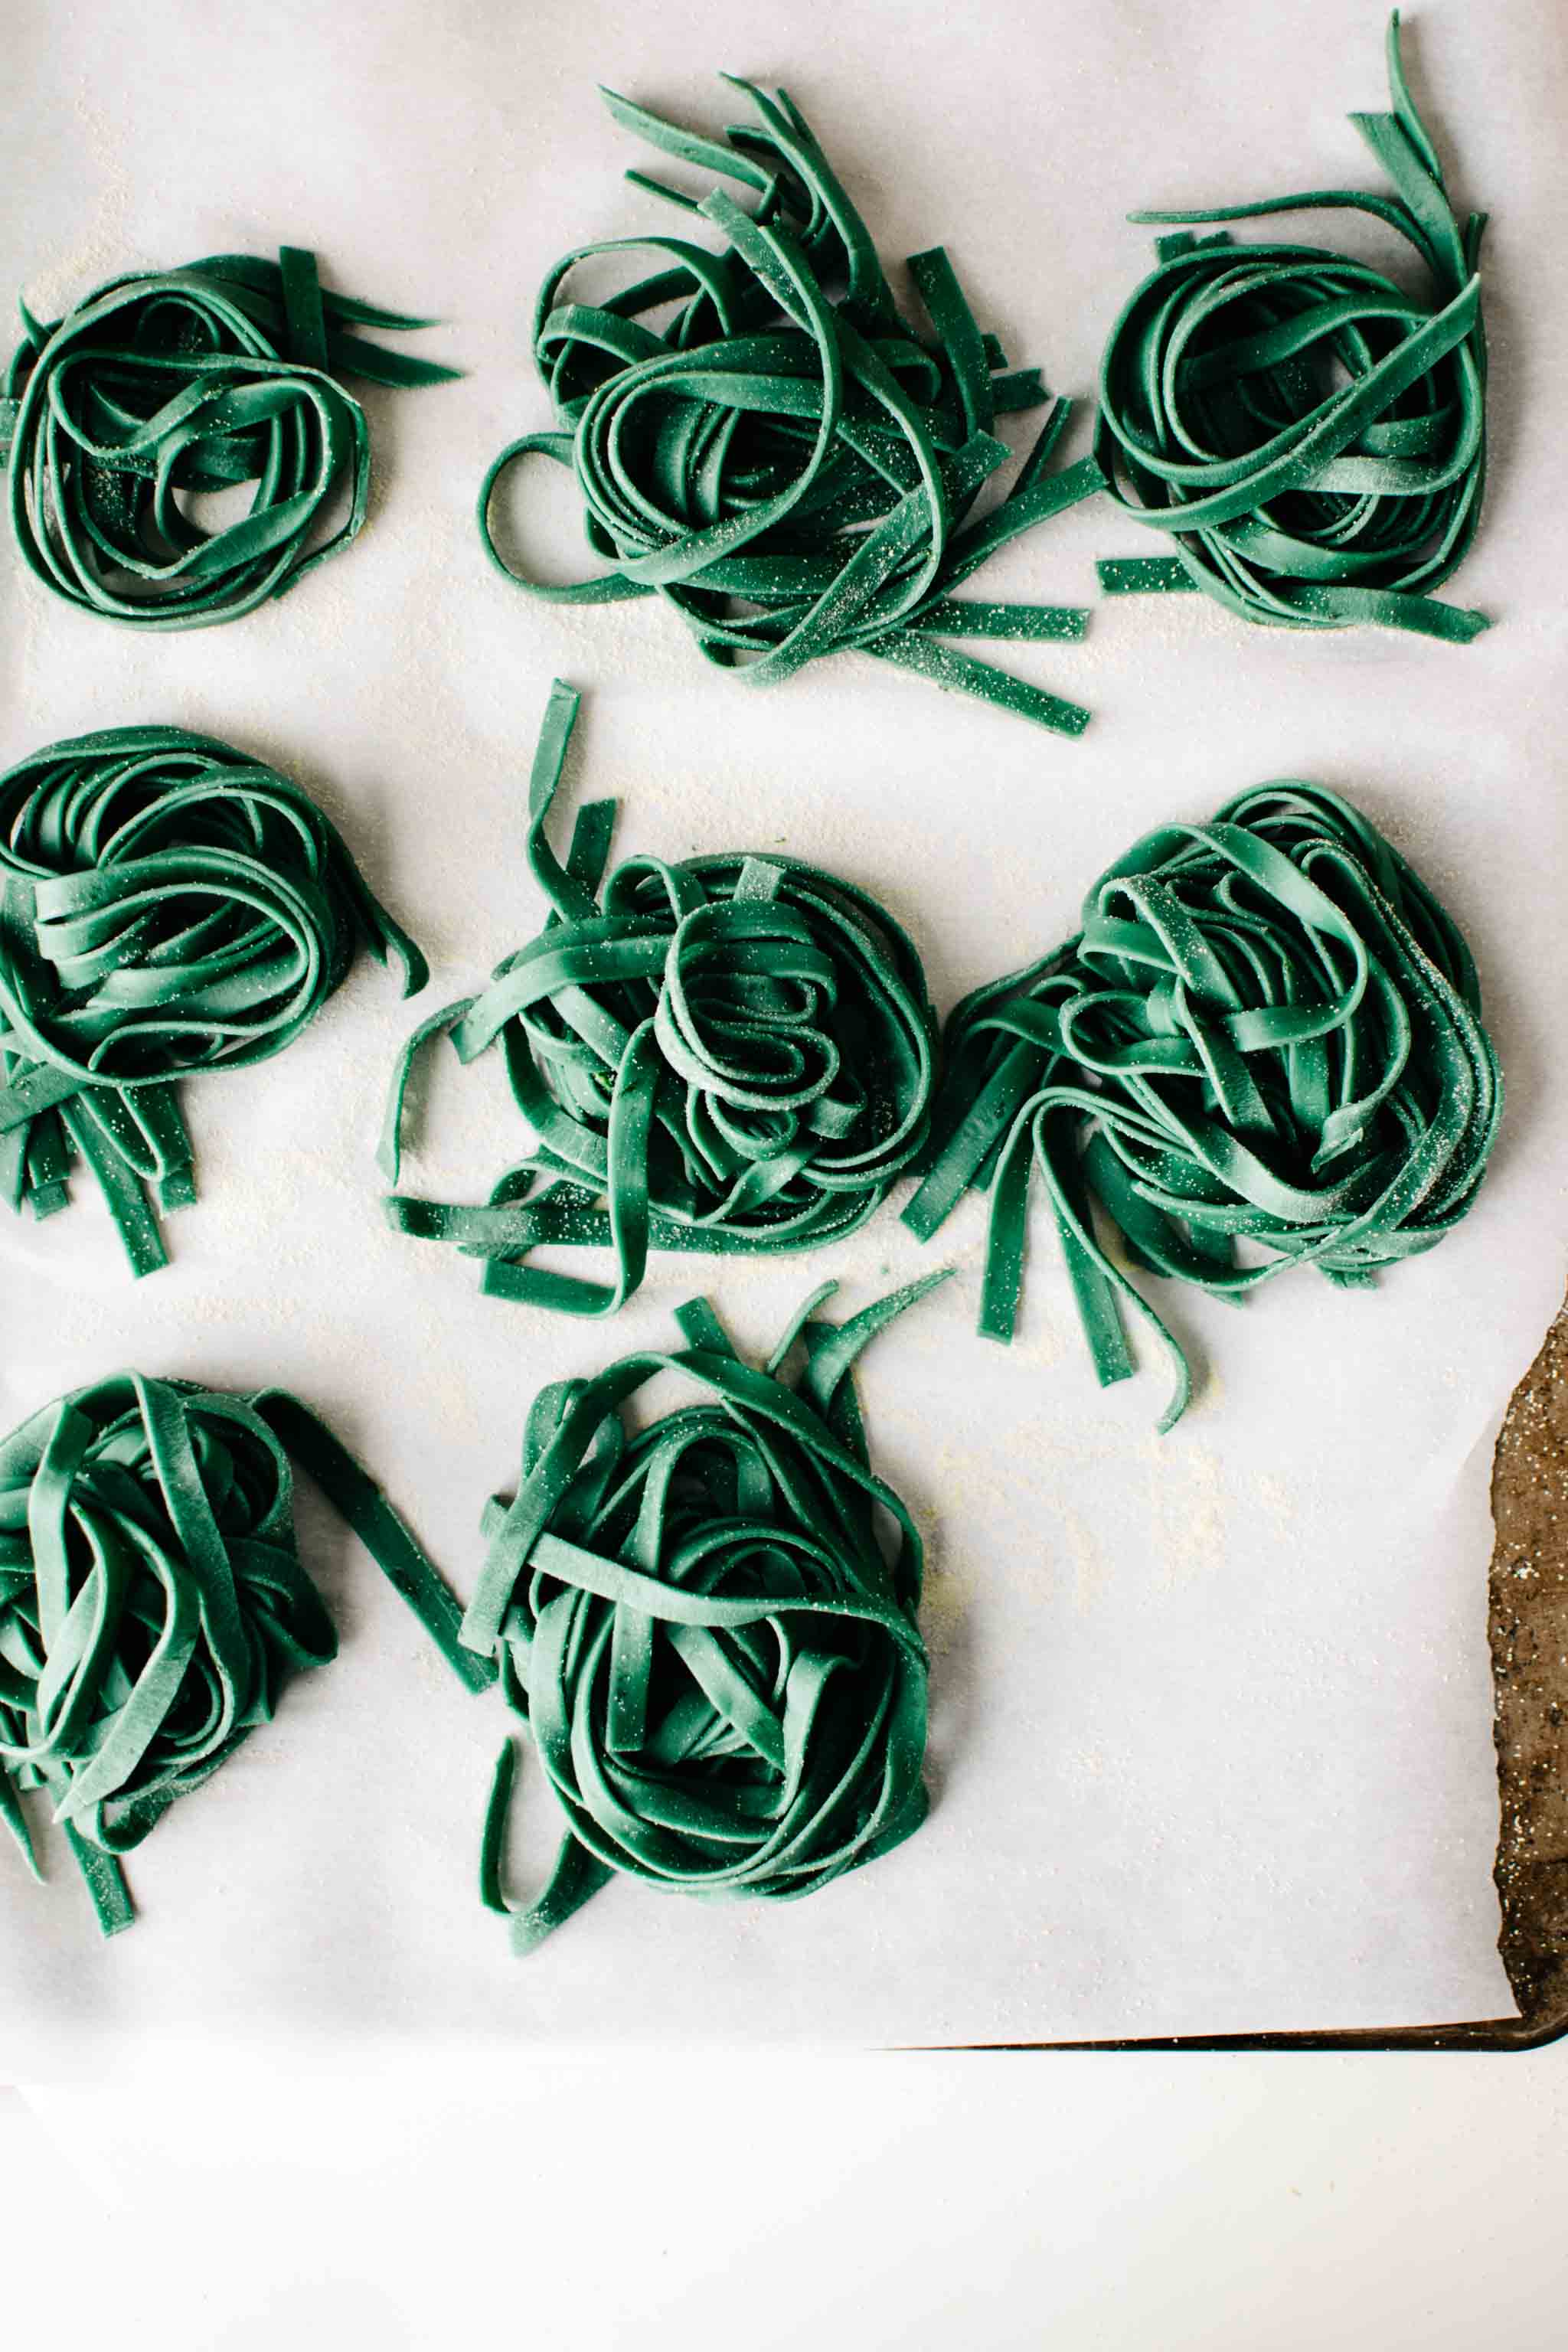 superfood green pasta nests